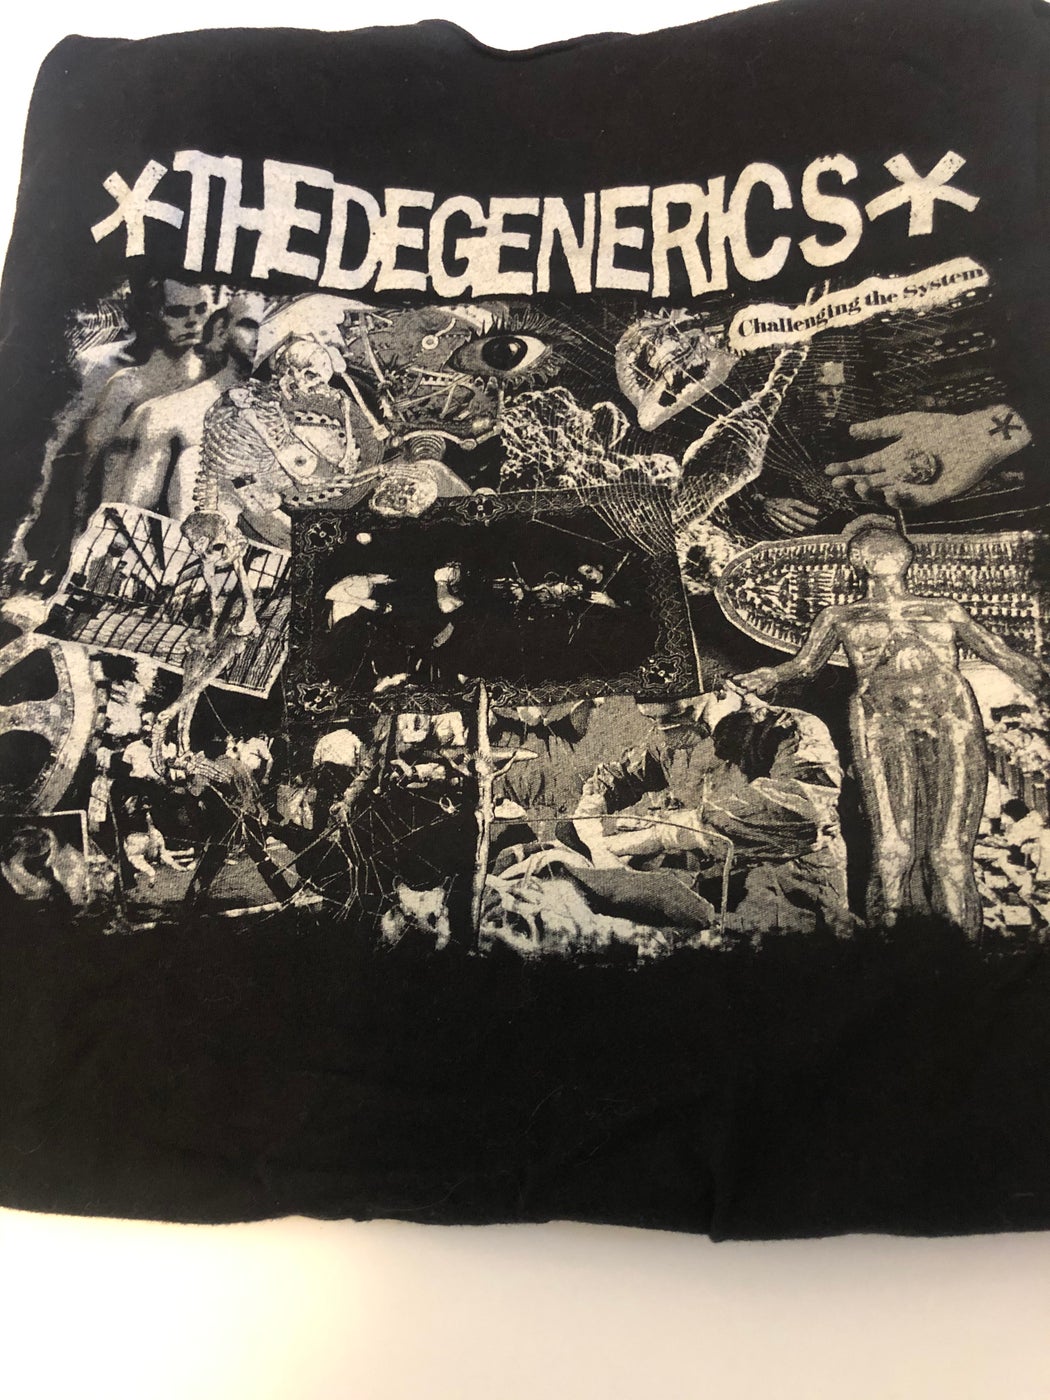 The Degenerics "Generica" T-Shirt